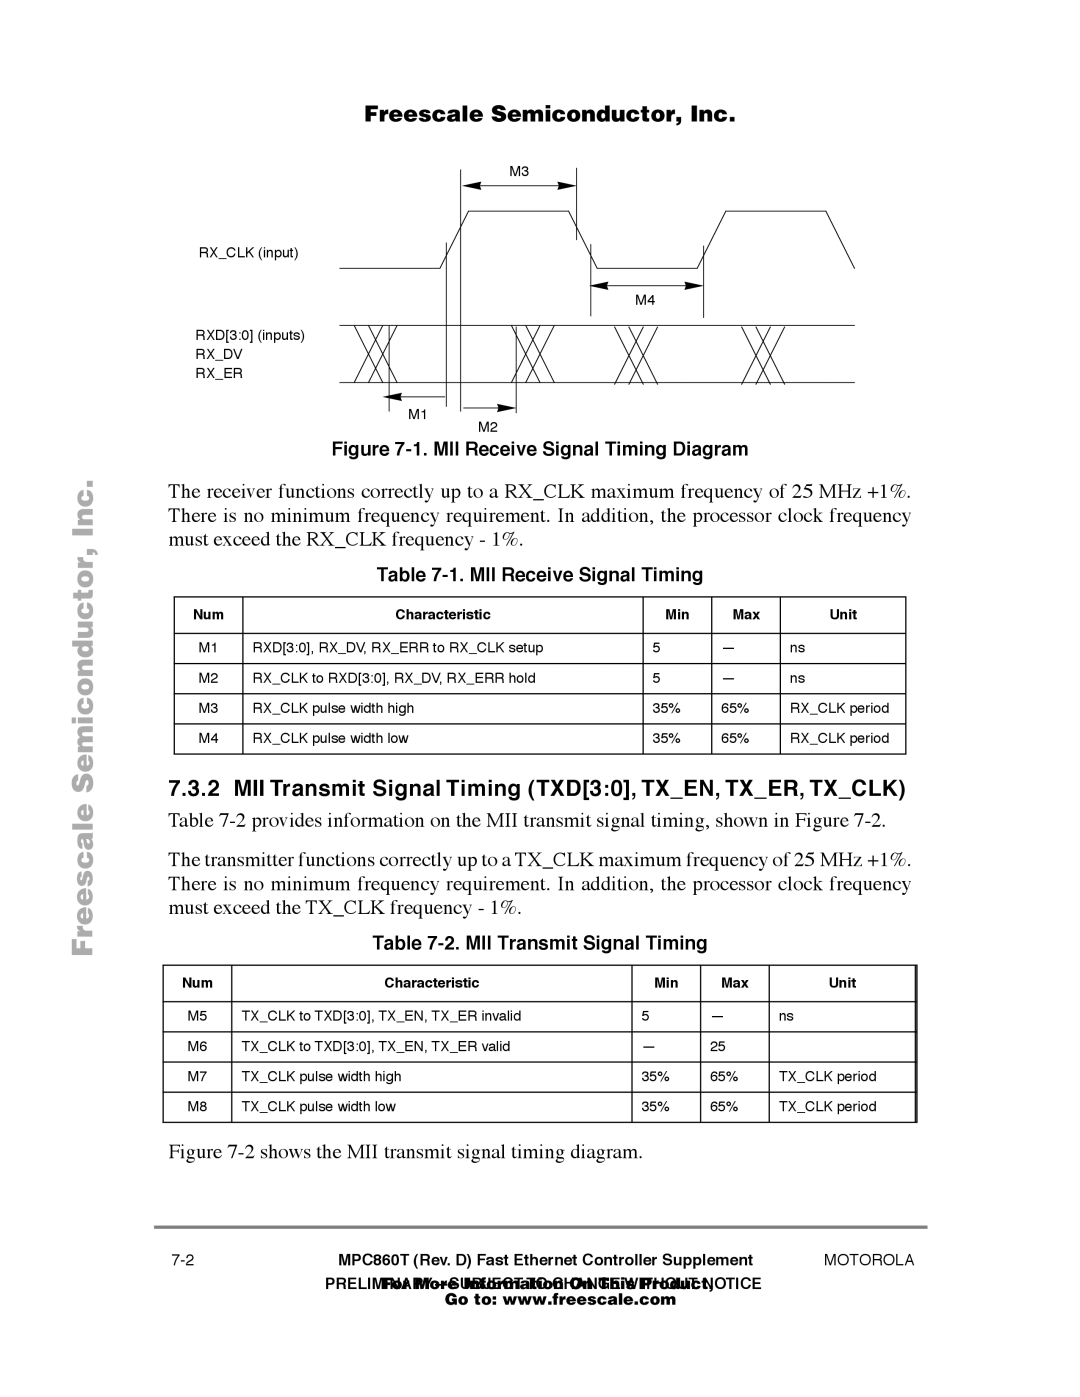 Freescale Semiconductor MPC860T MII Transmit Signal Timing TXD30, TXEN, TXER, Txclk, MII Receive Signal Timing, Rxdv Rxer 